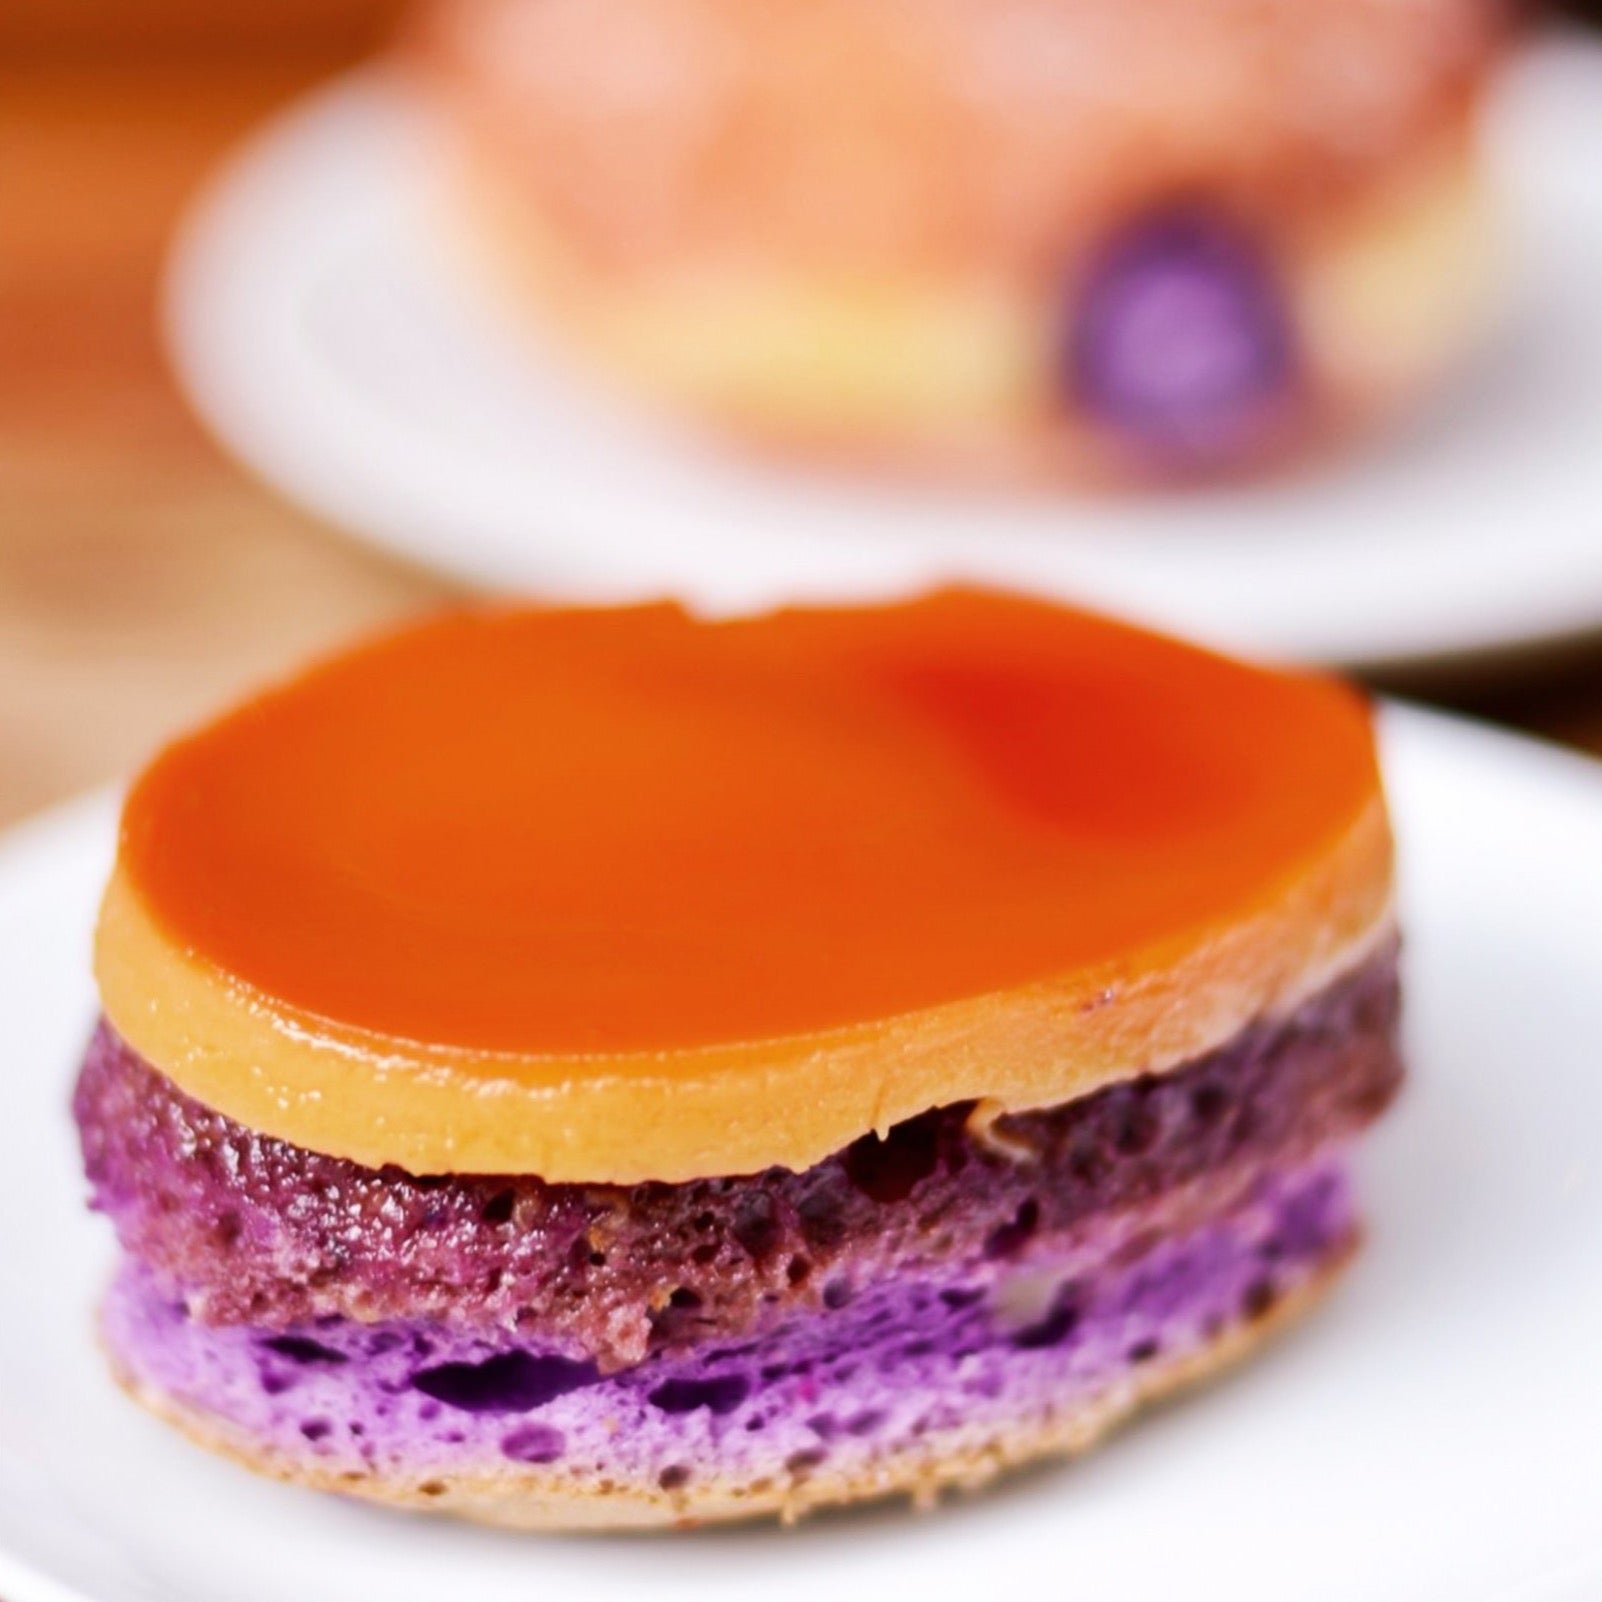 Purple Yam or Ube Custard Cake dessert on plate